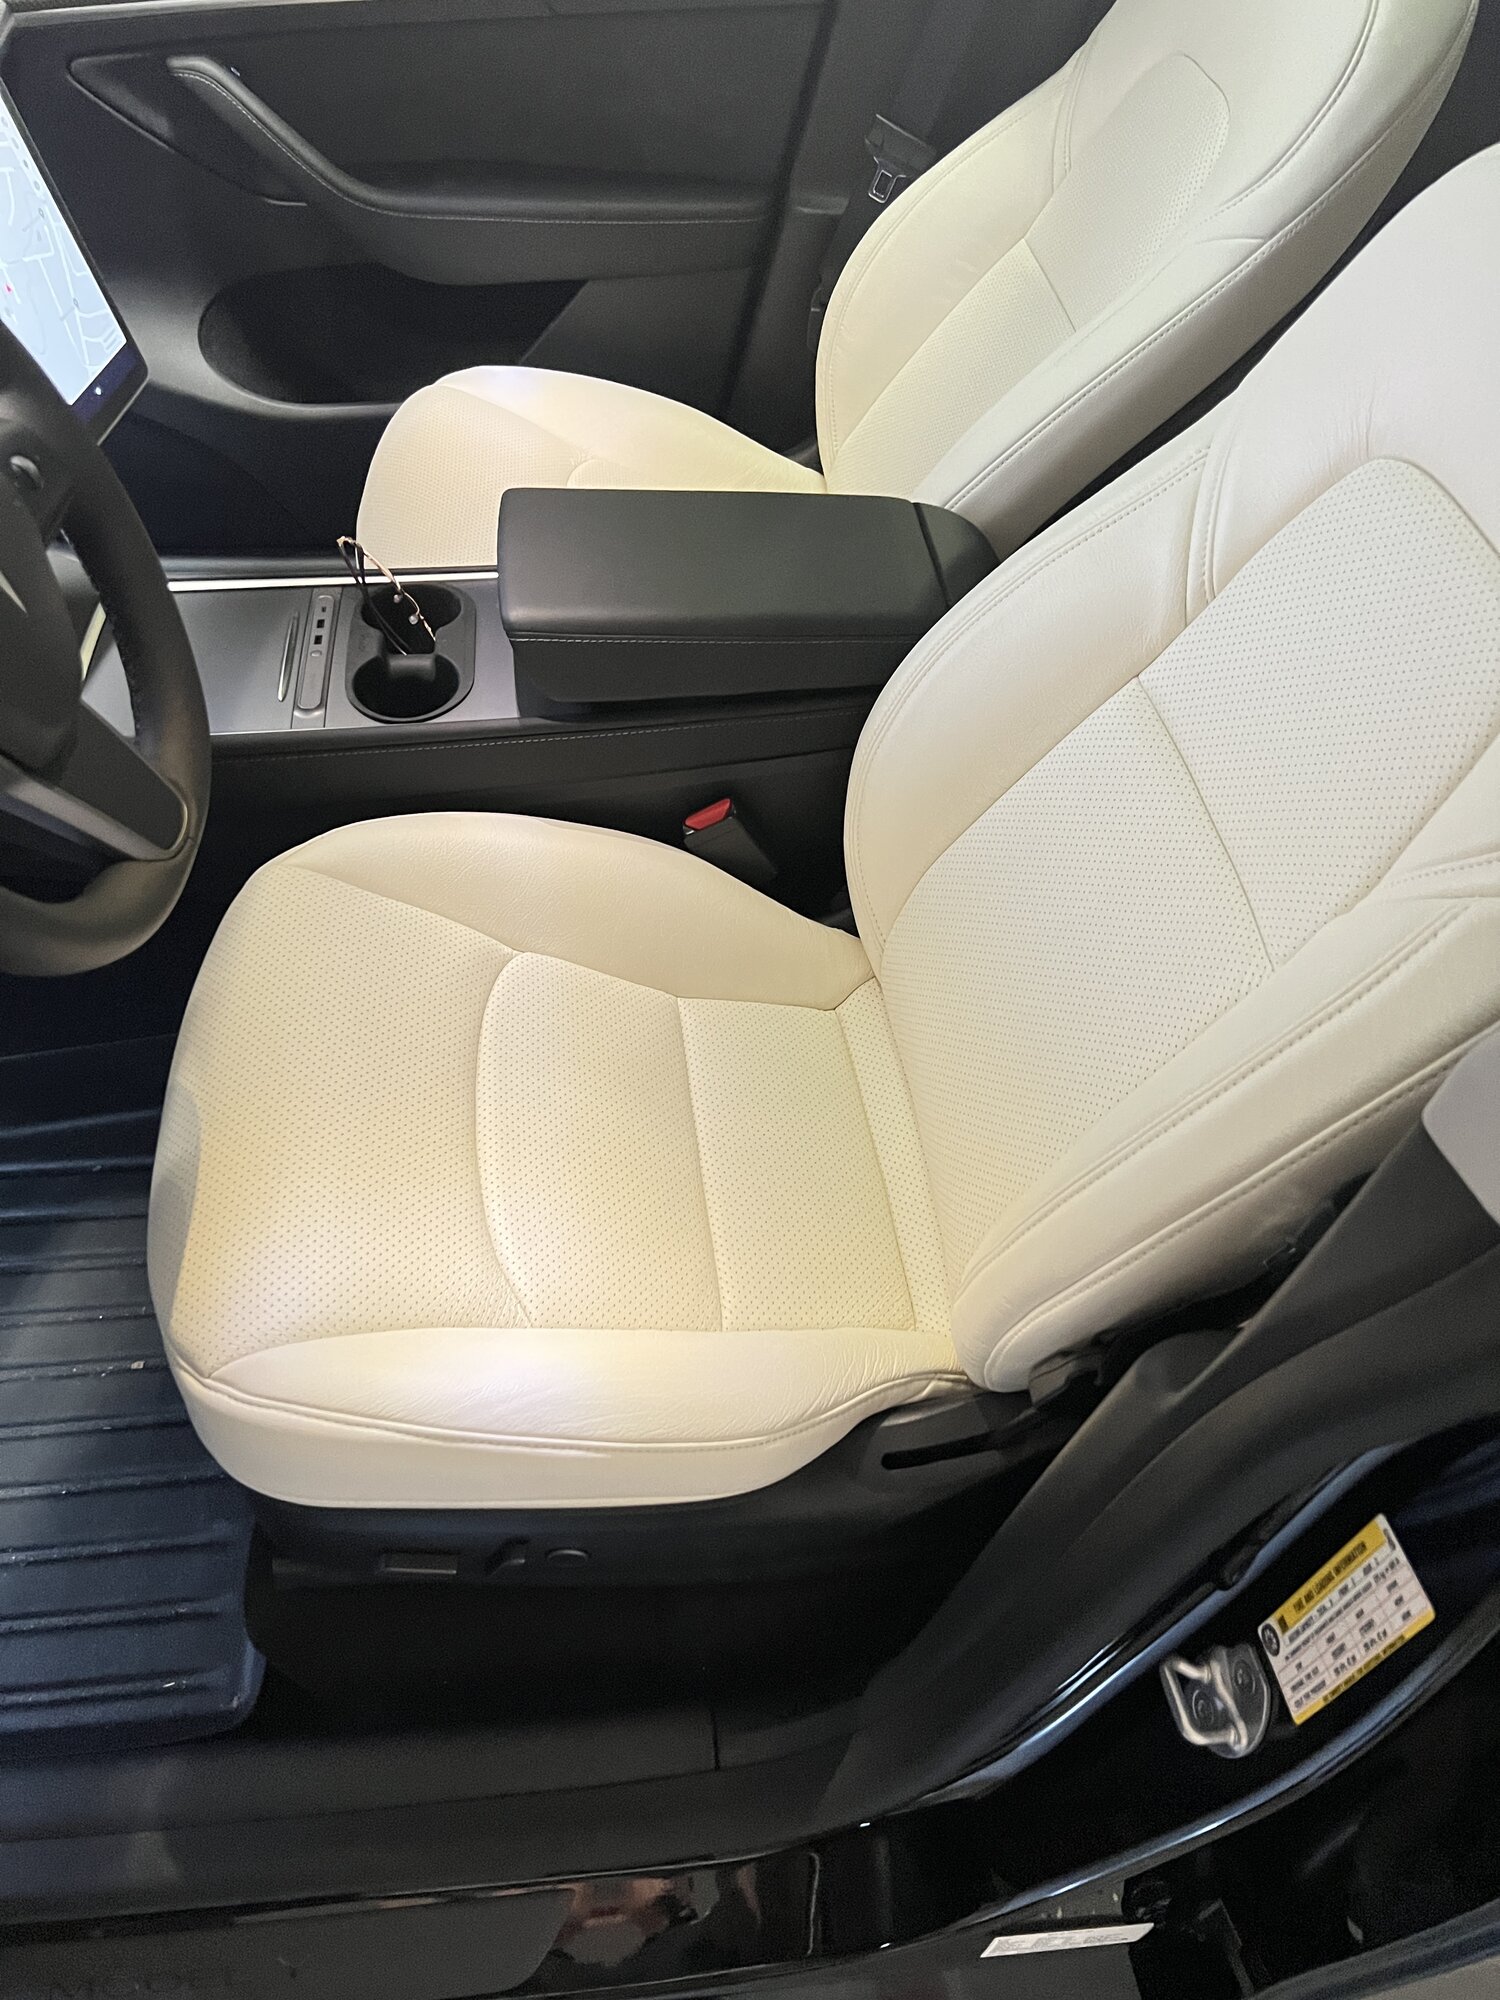 Aftermarket ventilated seats | Tesla Motors Club